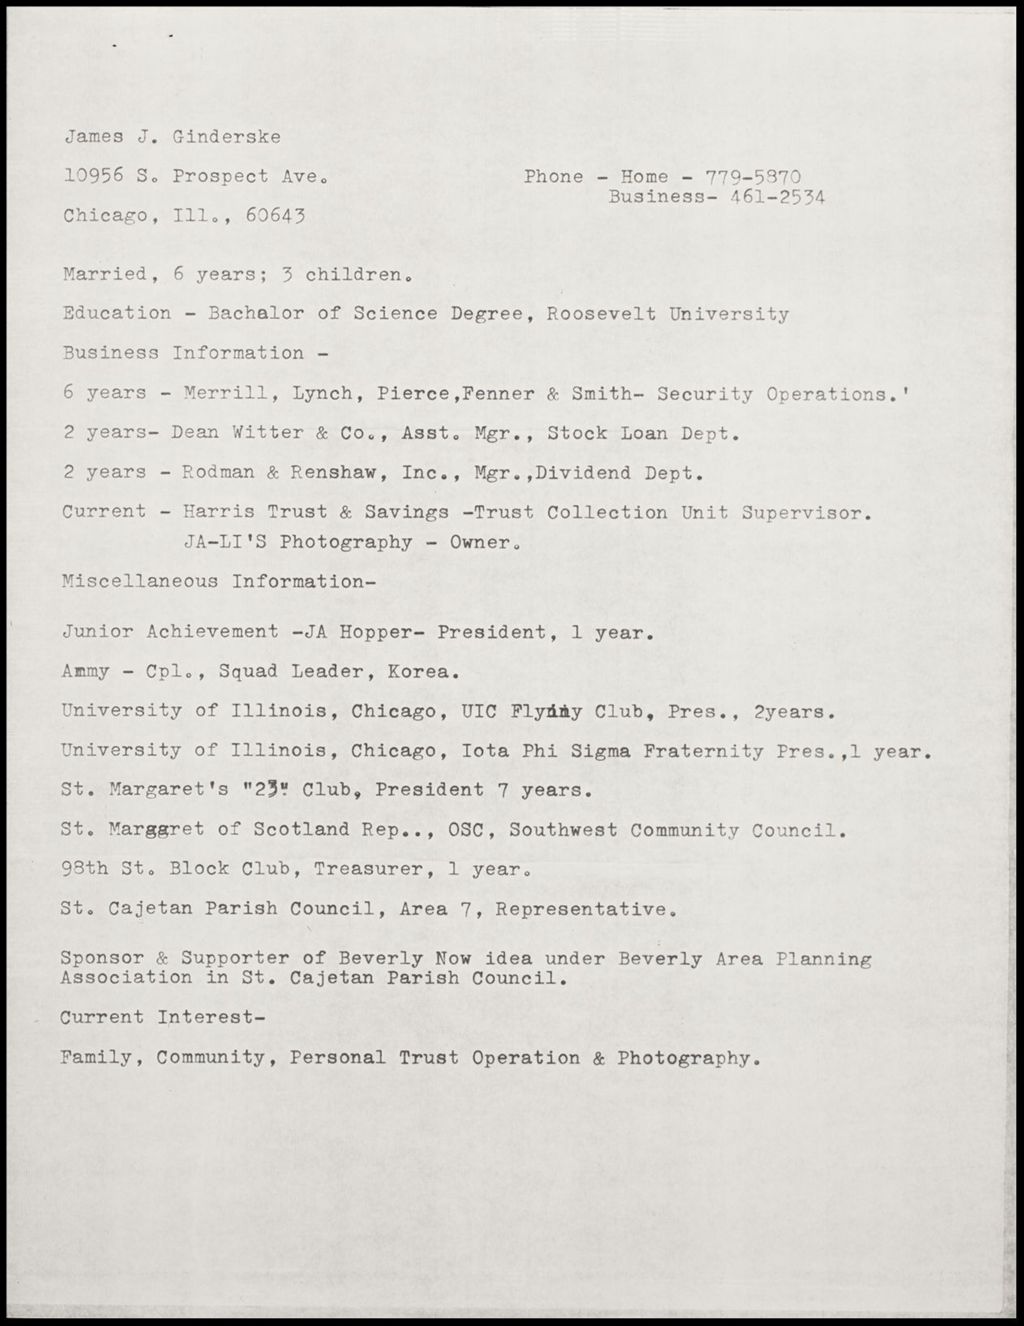 Miniature of Membership - associate nominations (Folder 132)